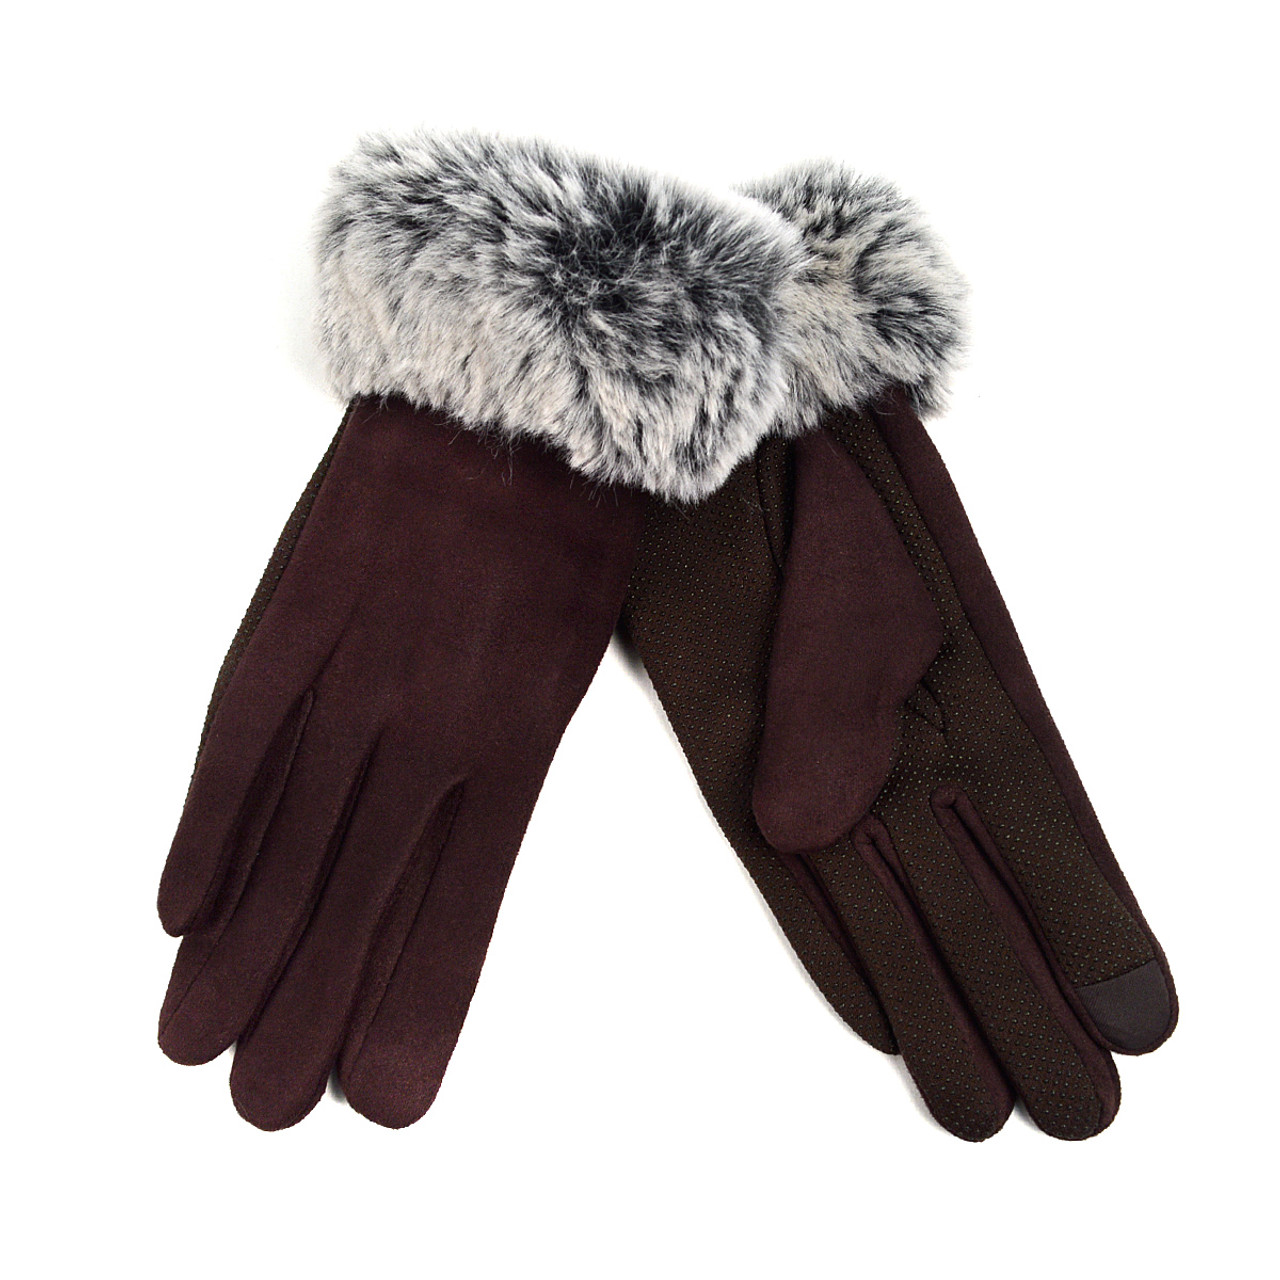 Women's Touch Screen Non-Slip Grip Winter Gloves with Fleece